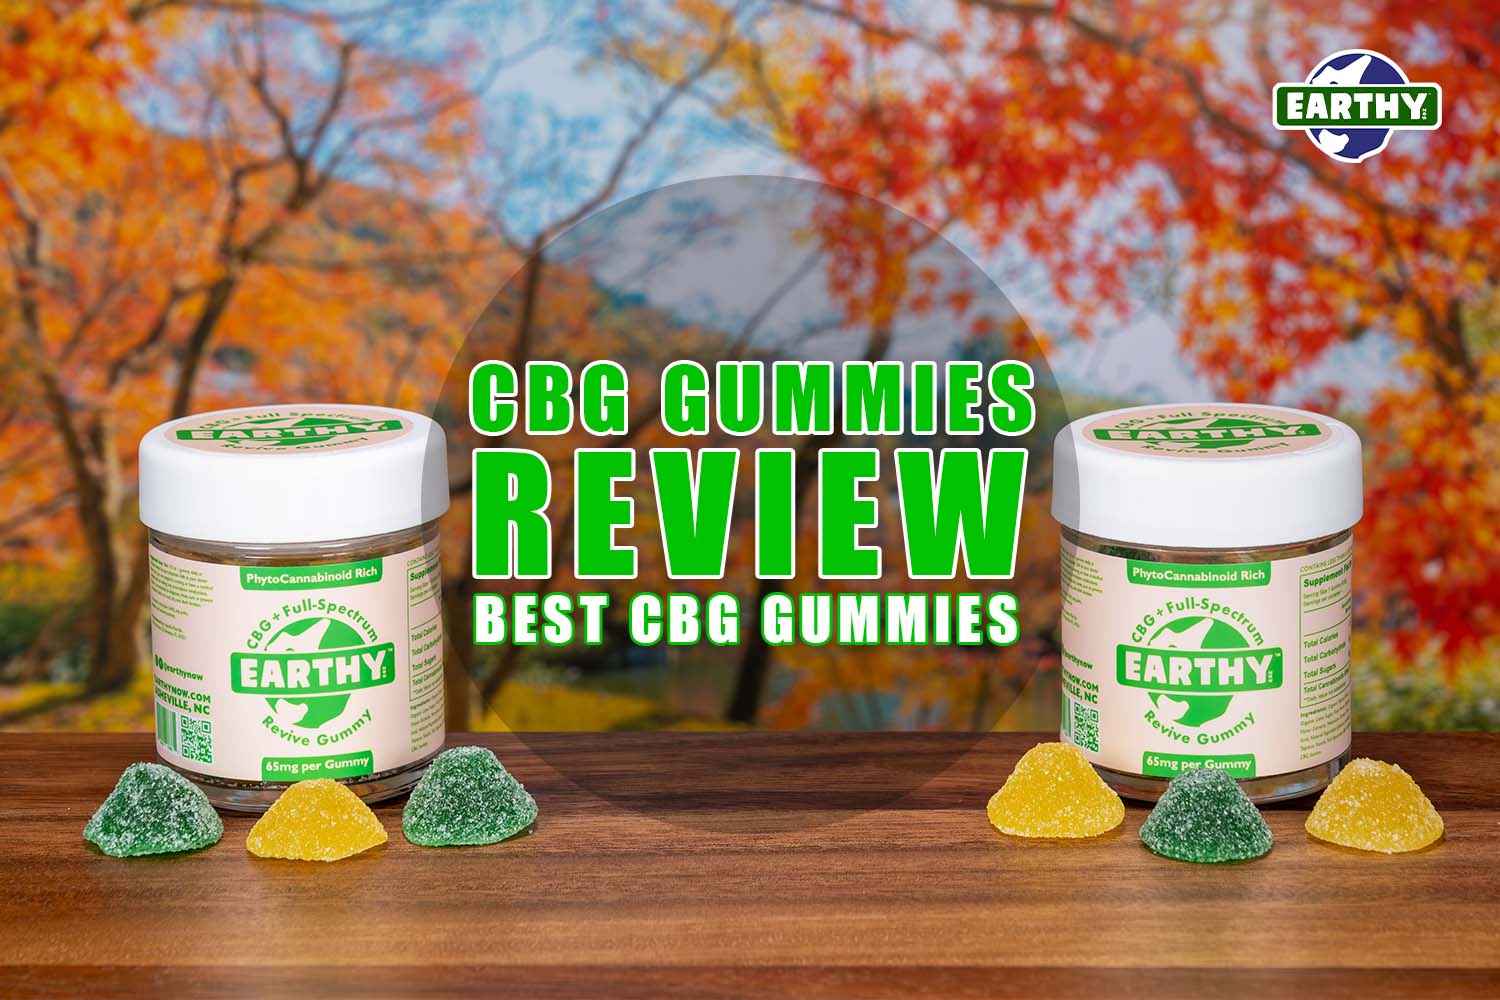 CBG Gummies Review: Best CBG Gummies. Earthy Now